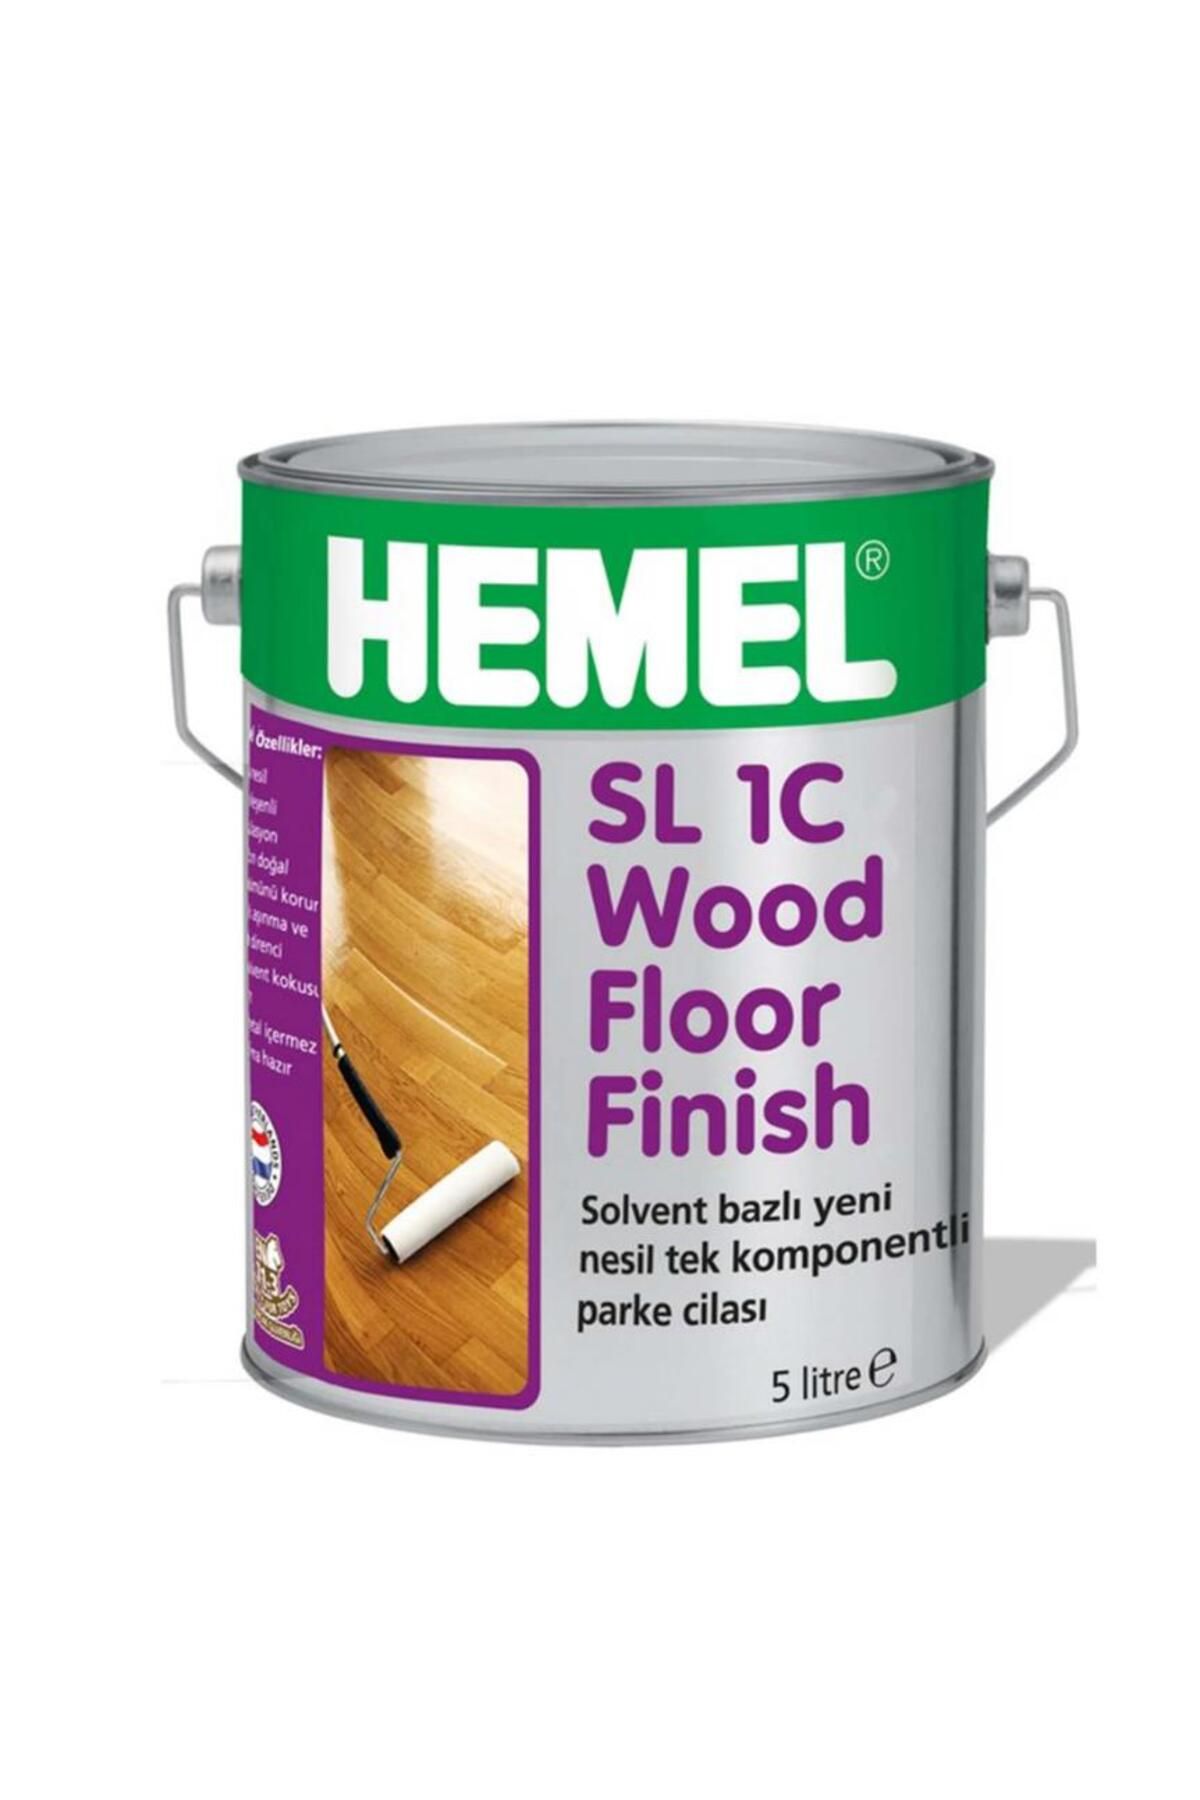 Hemel Sl 1C Wood Floor Finish İpek Mat 5 lt Parke Cilası Solvent Bazlı